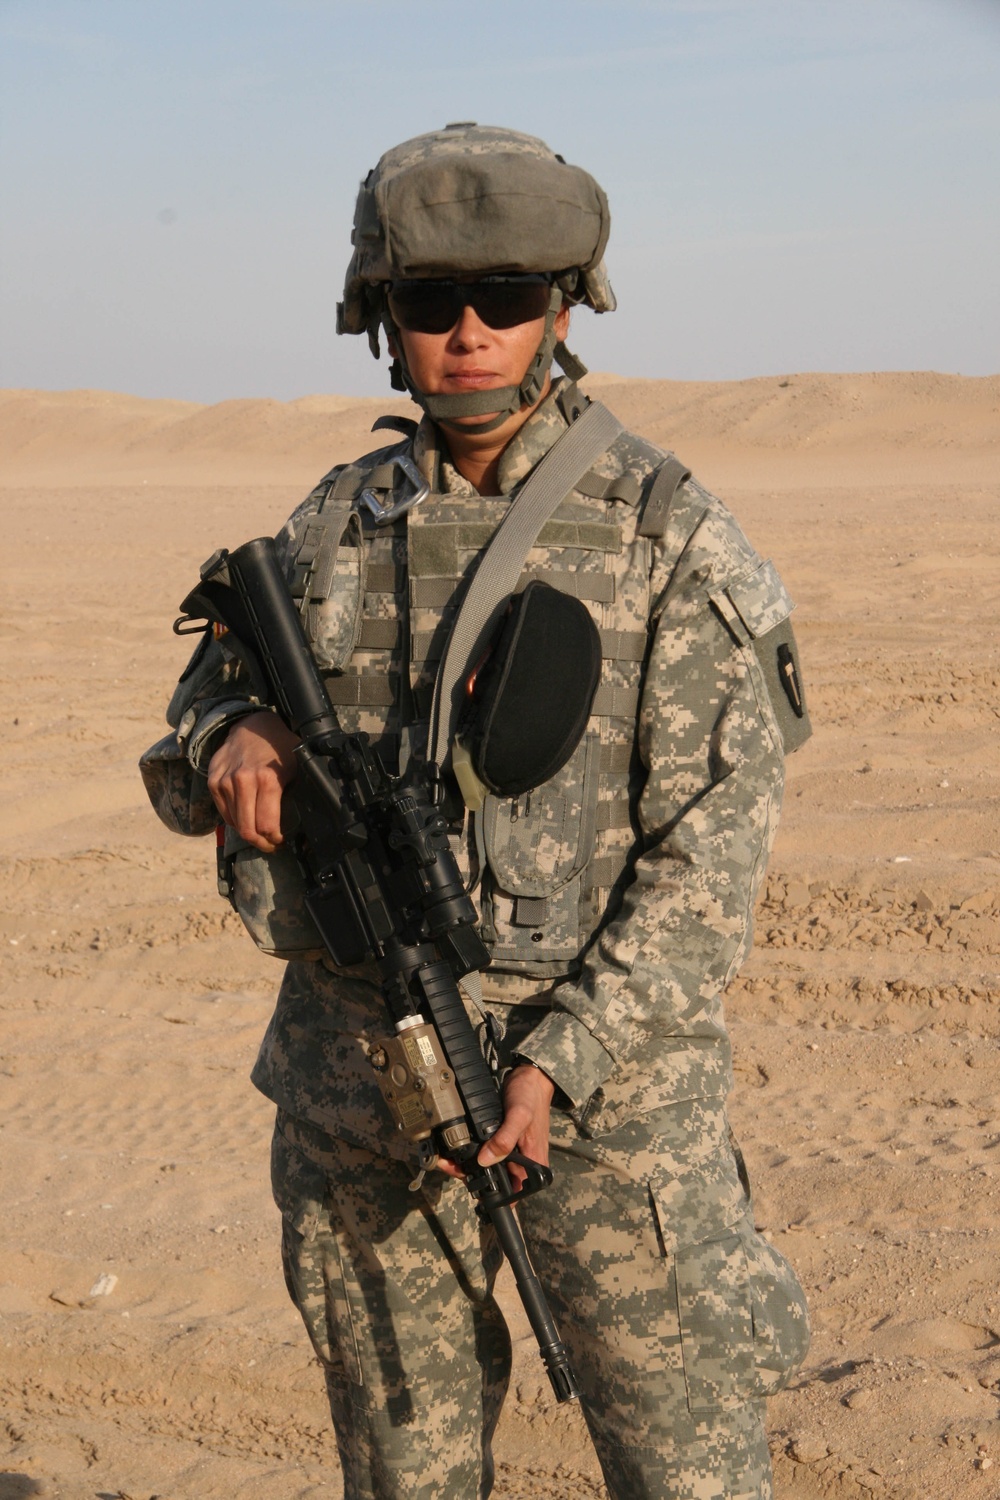 DVIDS - News - Women Soldiers